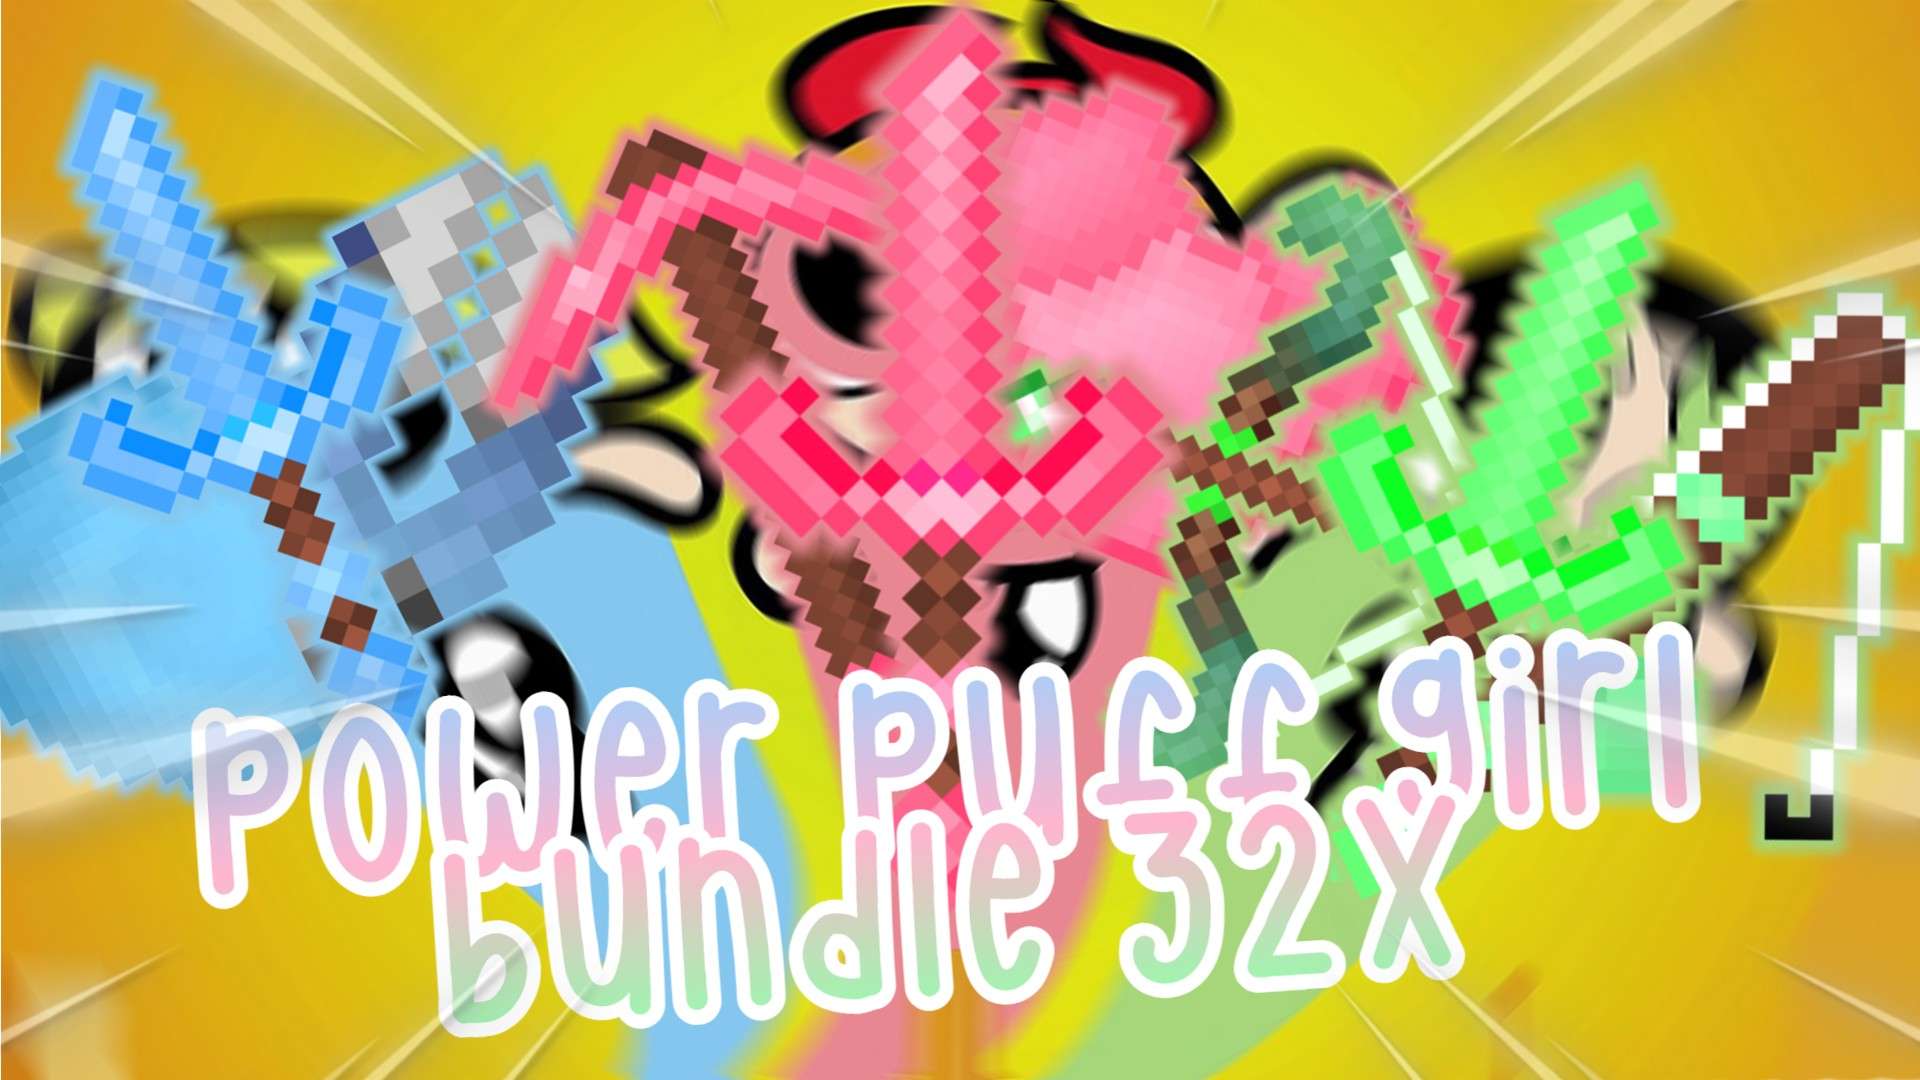 Bubbles (powerpuff girls bundle) 32x by veebri on PvPRP